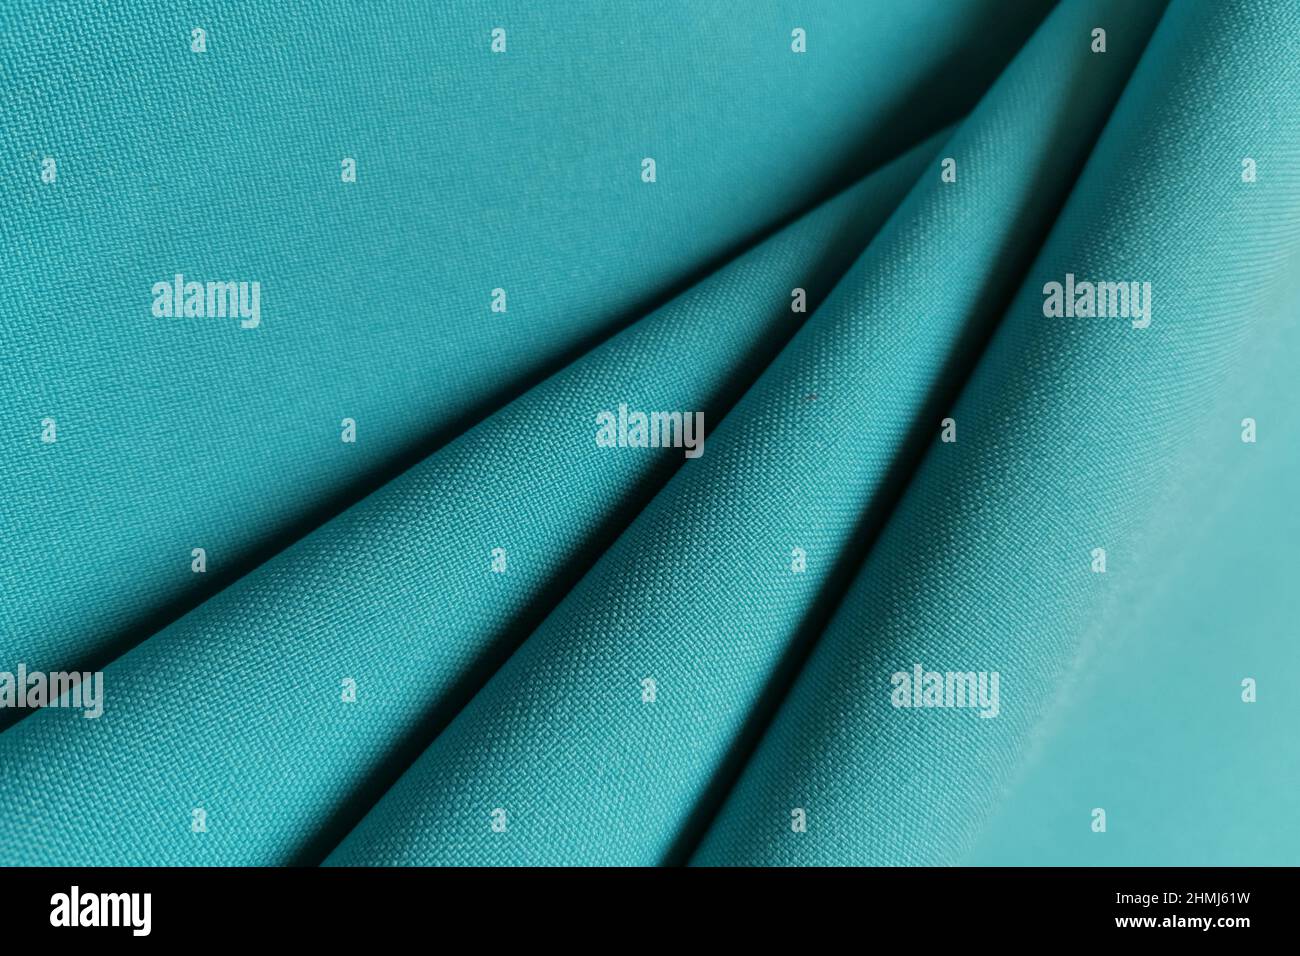 Green crumpled or wavy fabric texture background. Abstract linen cloth soft waves. Gabardine wool fabric. Merino yarn. Smooth elegant luxury cloth Stock Photo